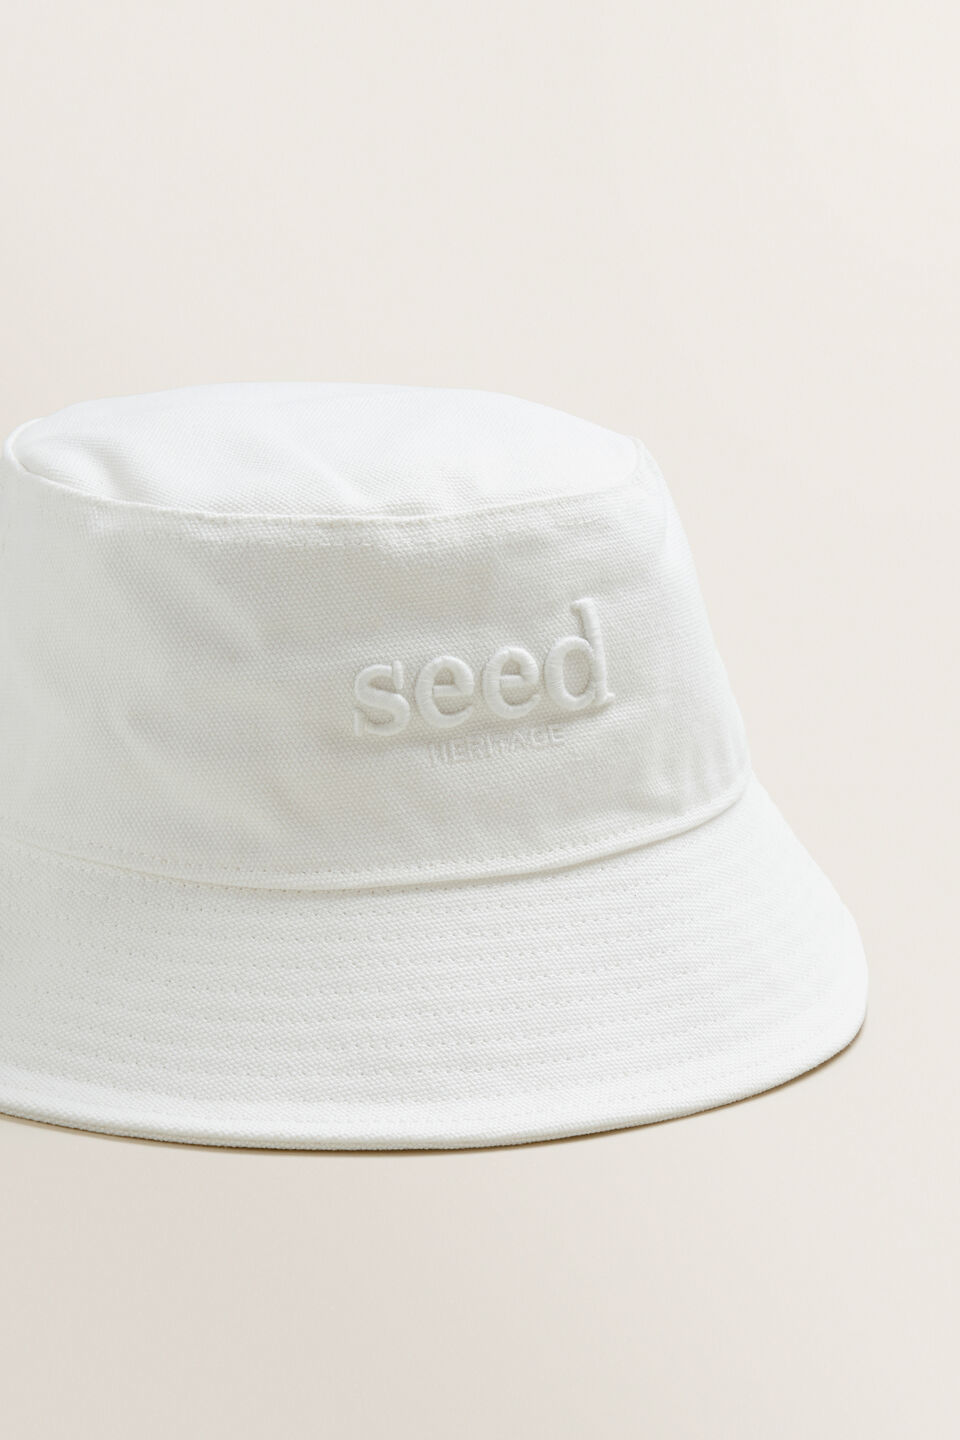 Seed Heritage Bucket Hat  